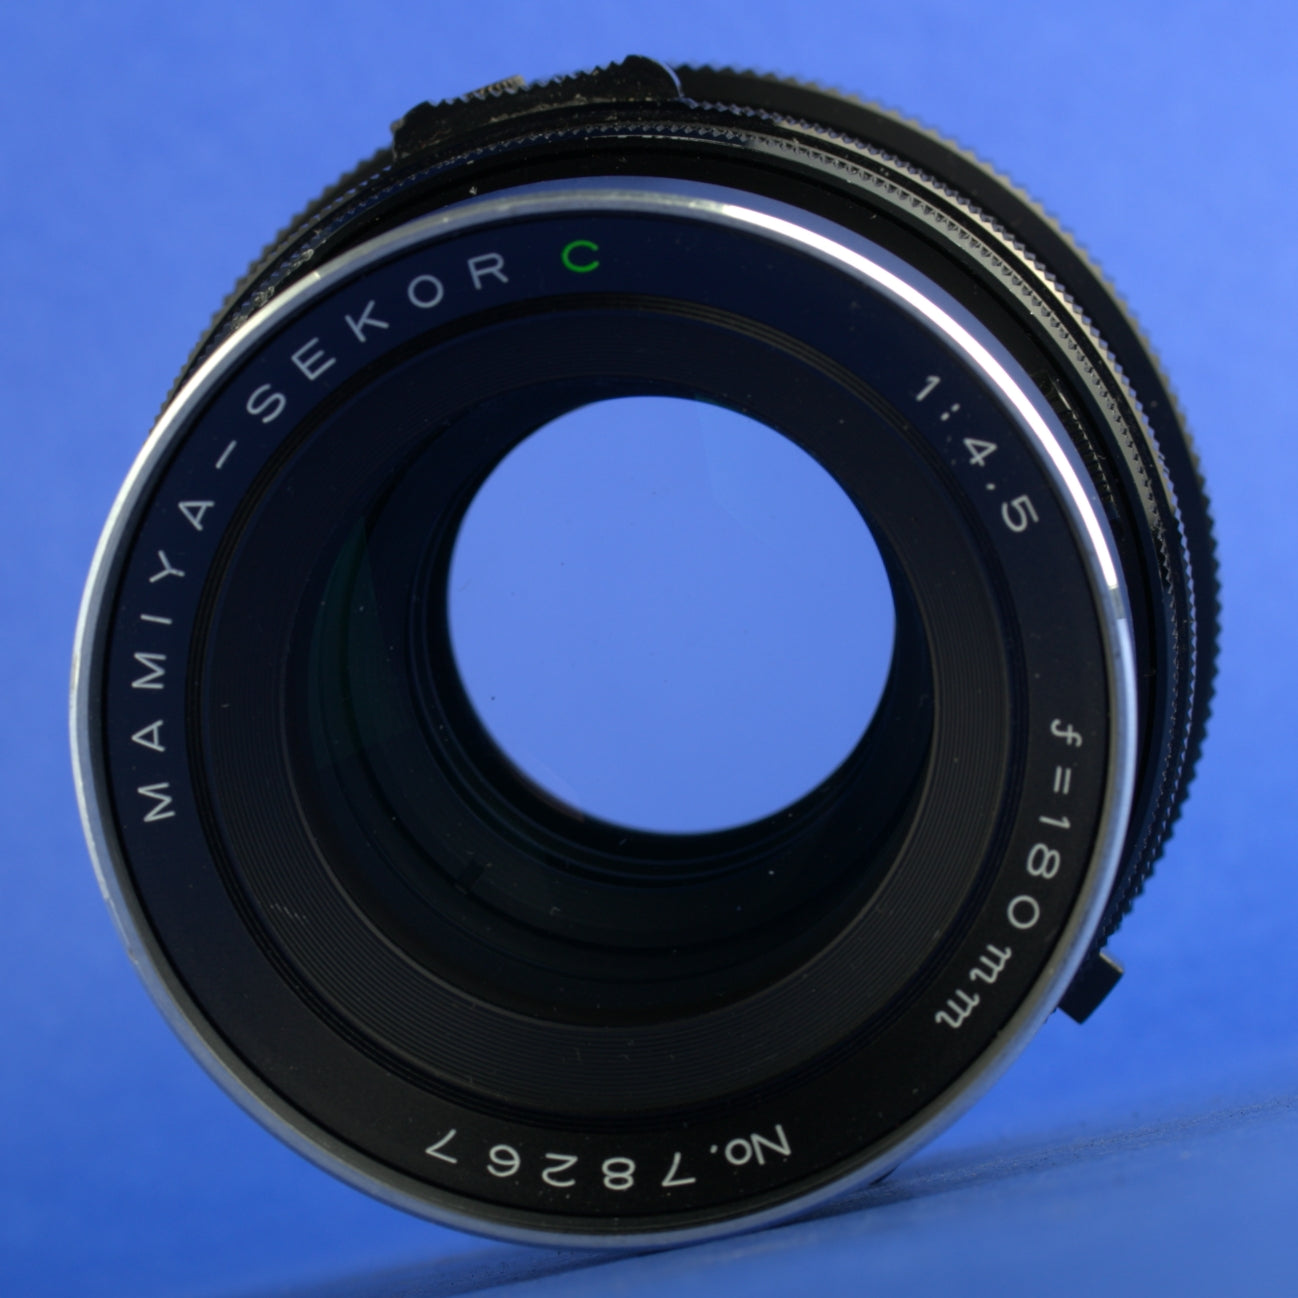 Mamiya RB67 180mm 4.5 Lens